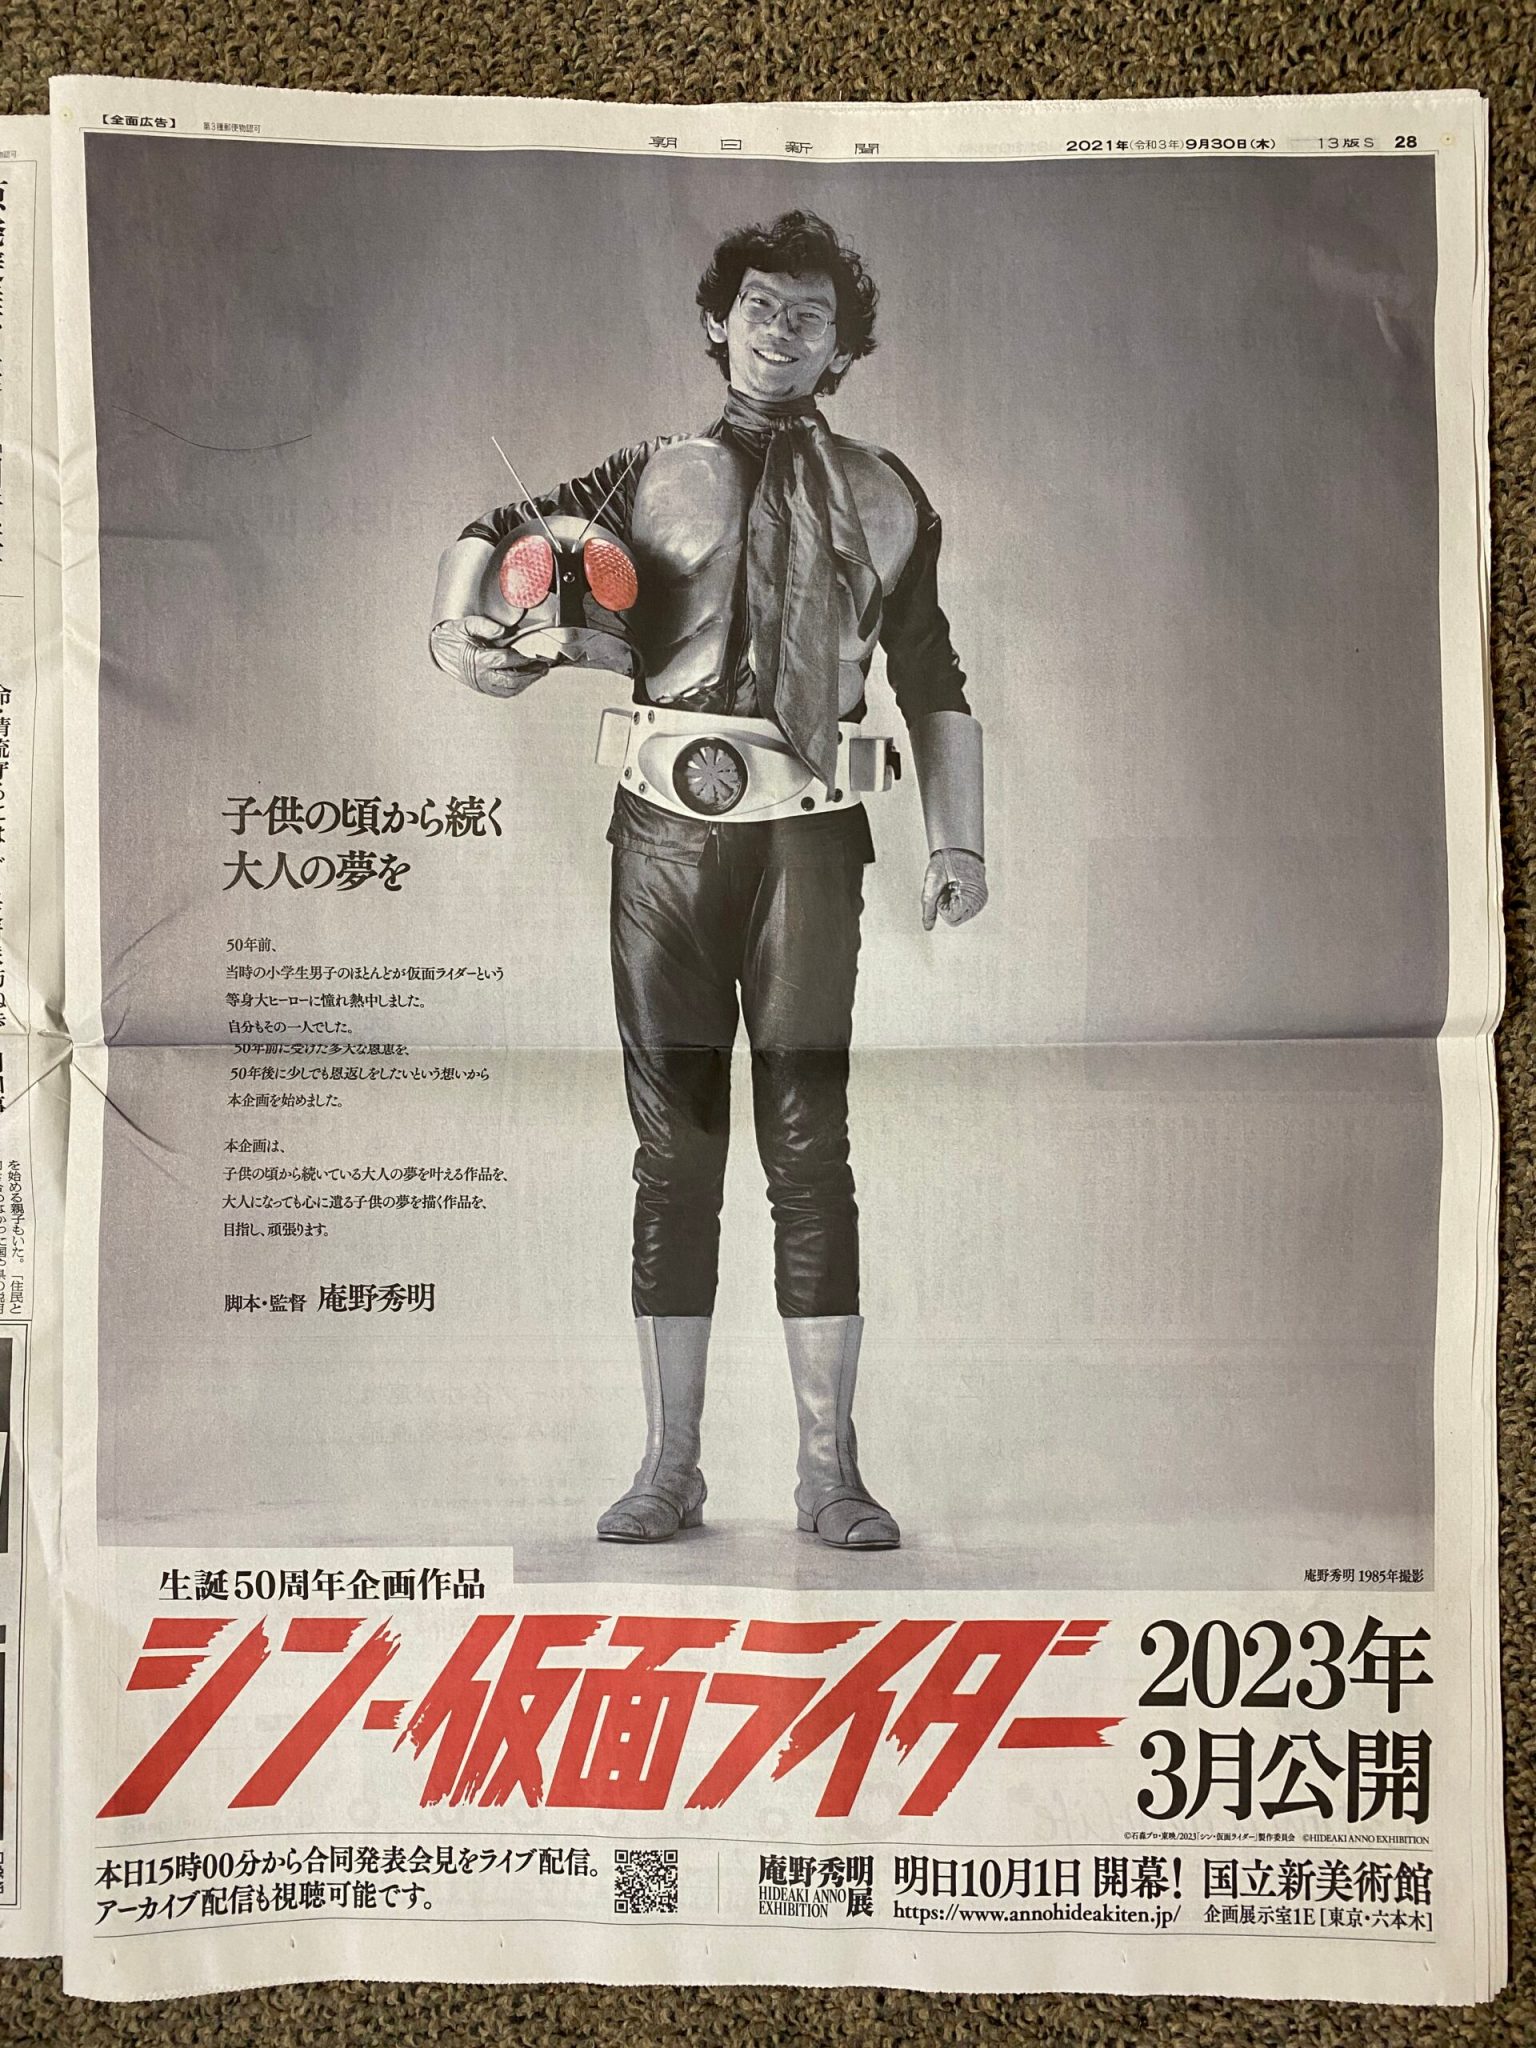 Hideaki Anno as Kamen Rider